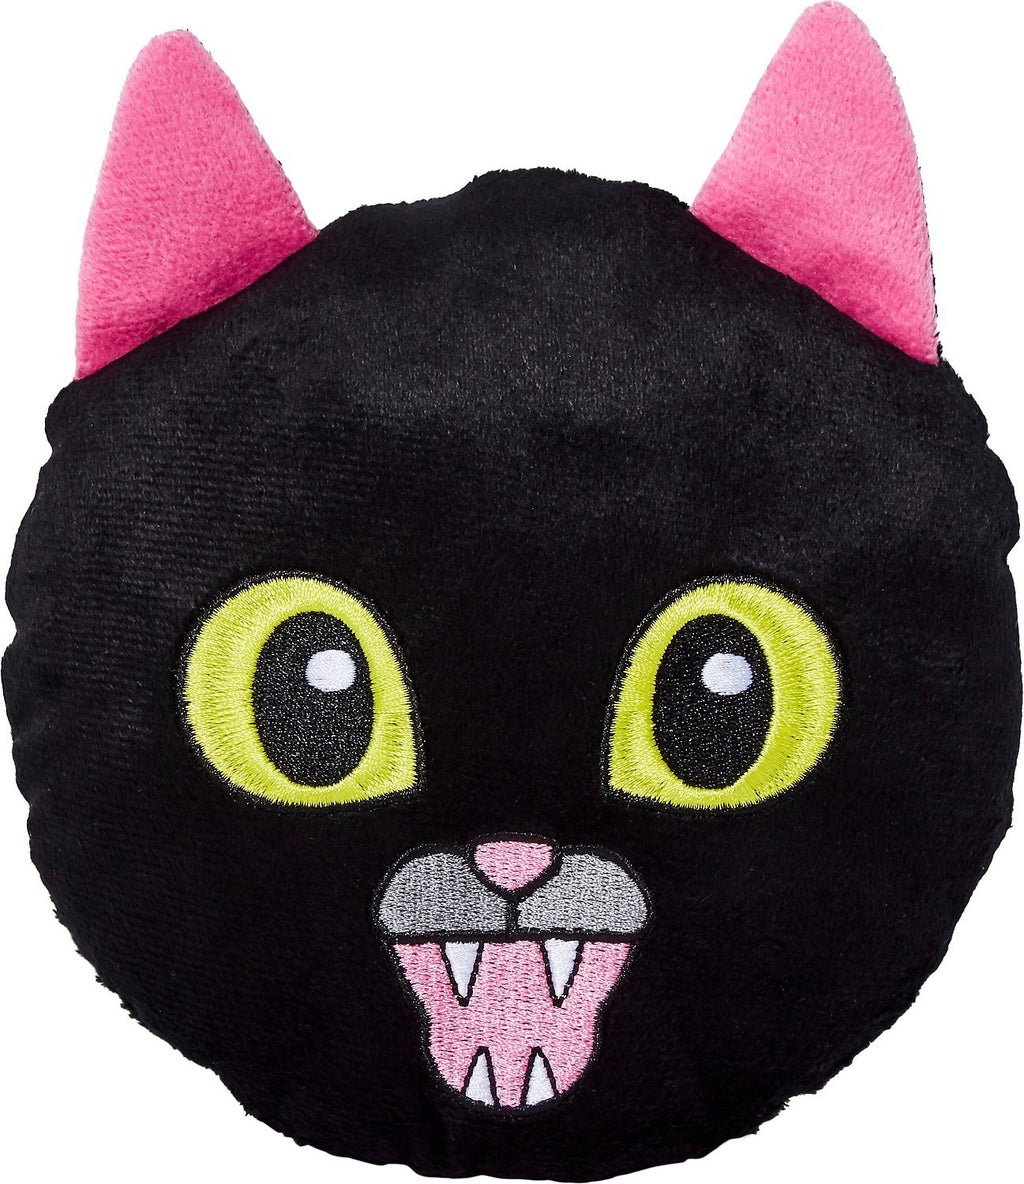 black cat dog toy